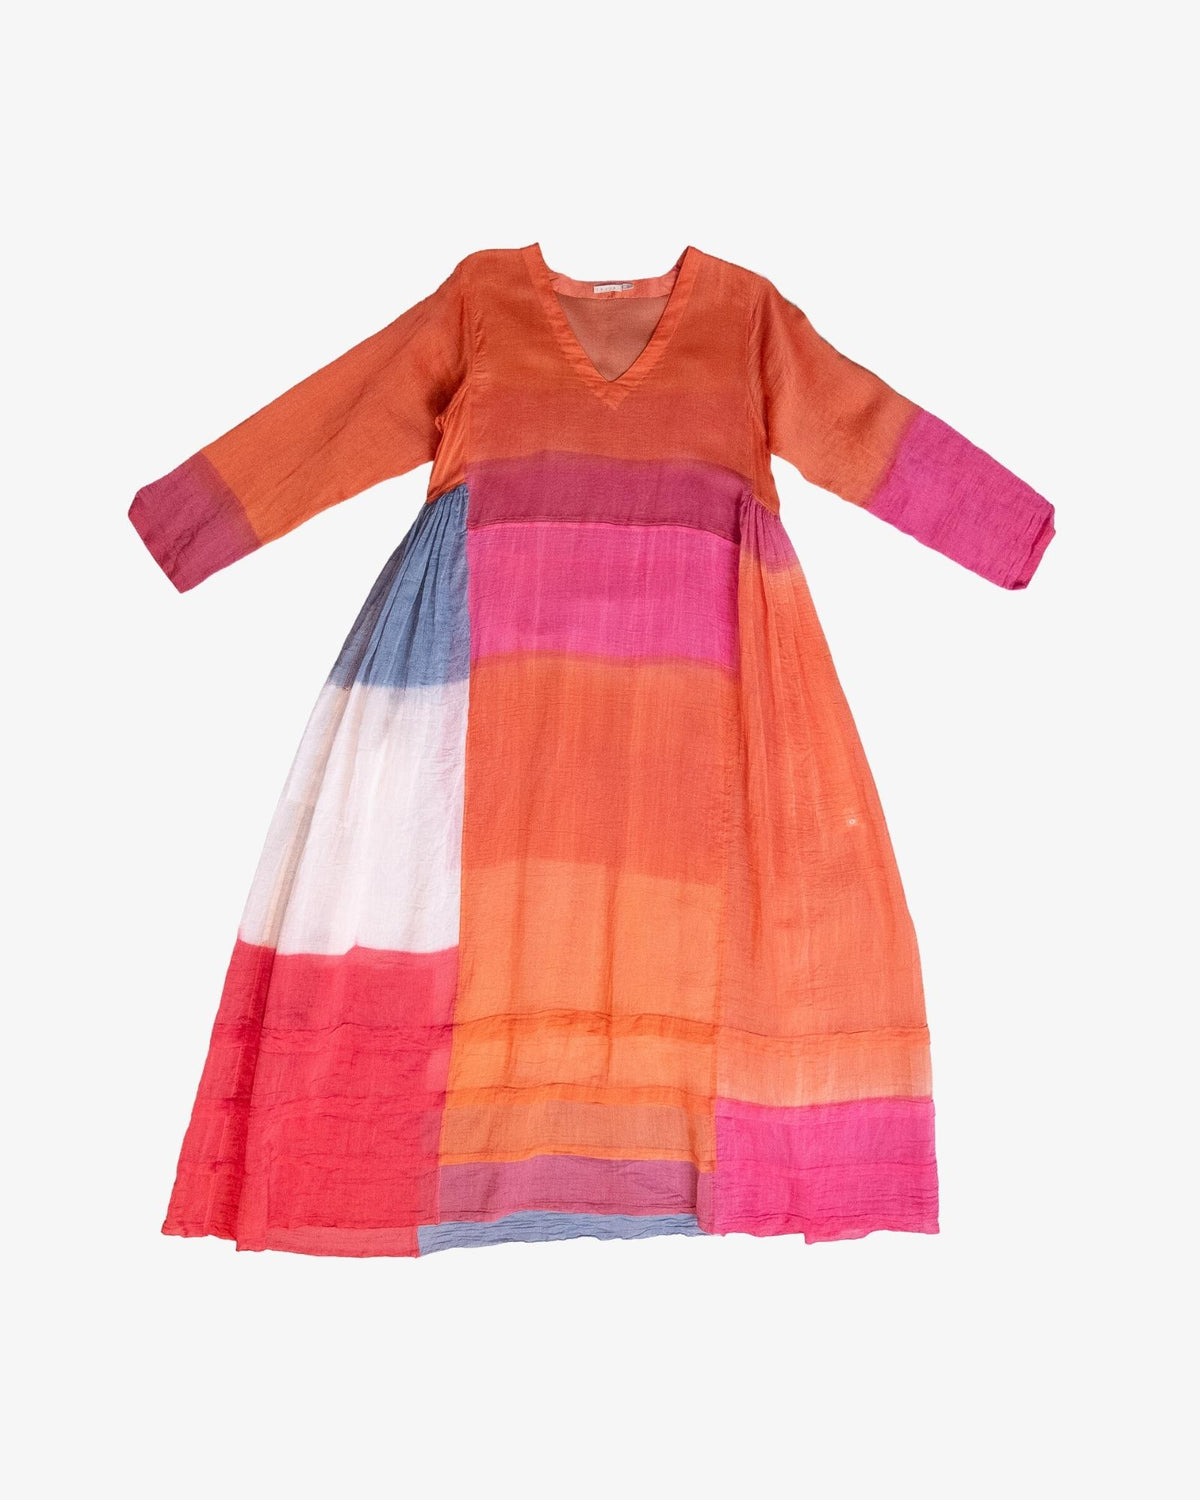 Colorblock Dress by Injiri